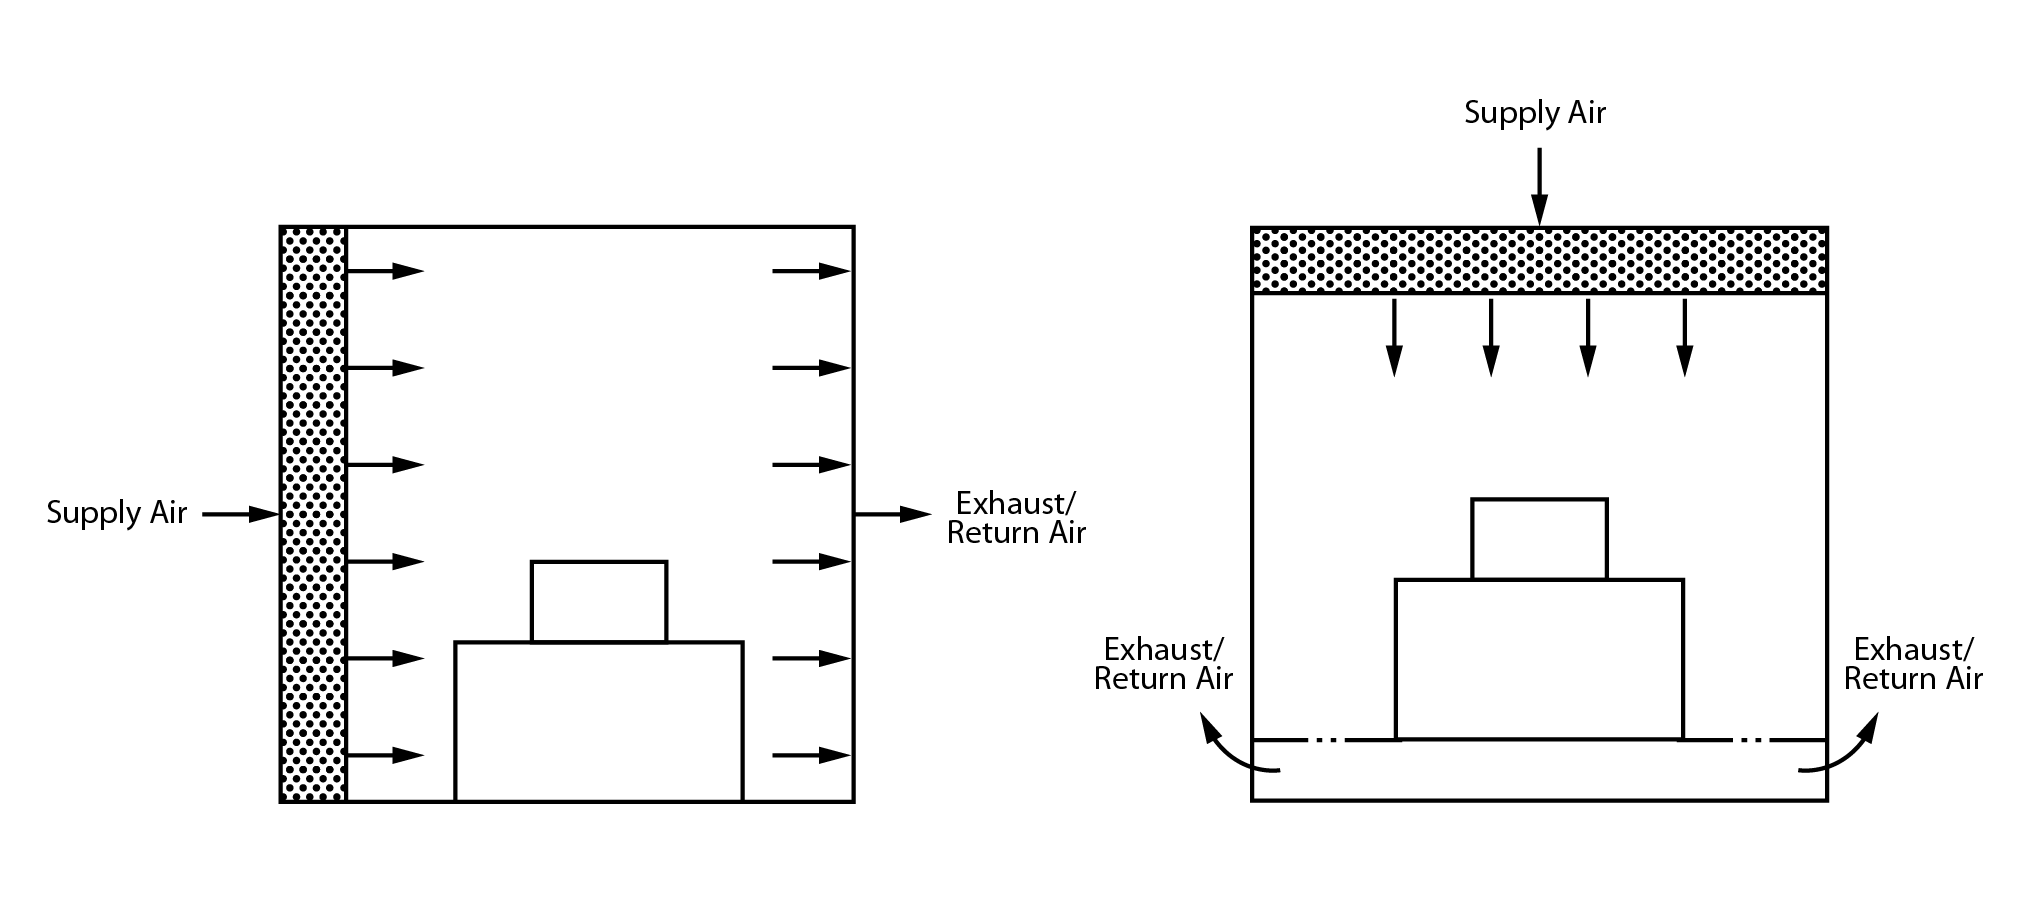 Unidirectional airflow diagram